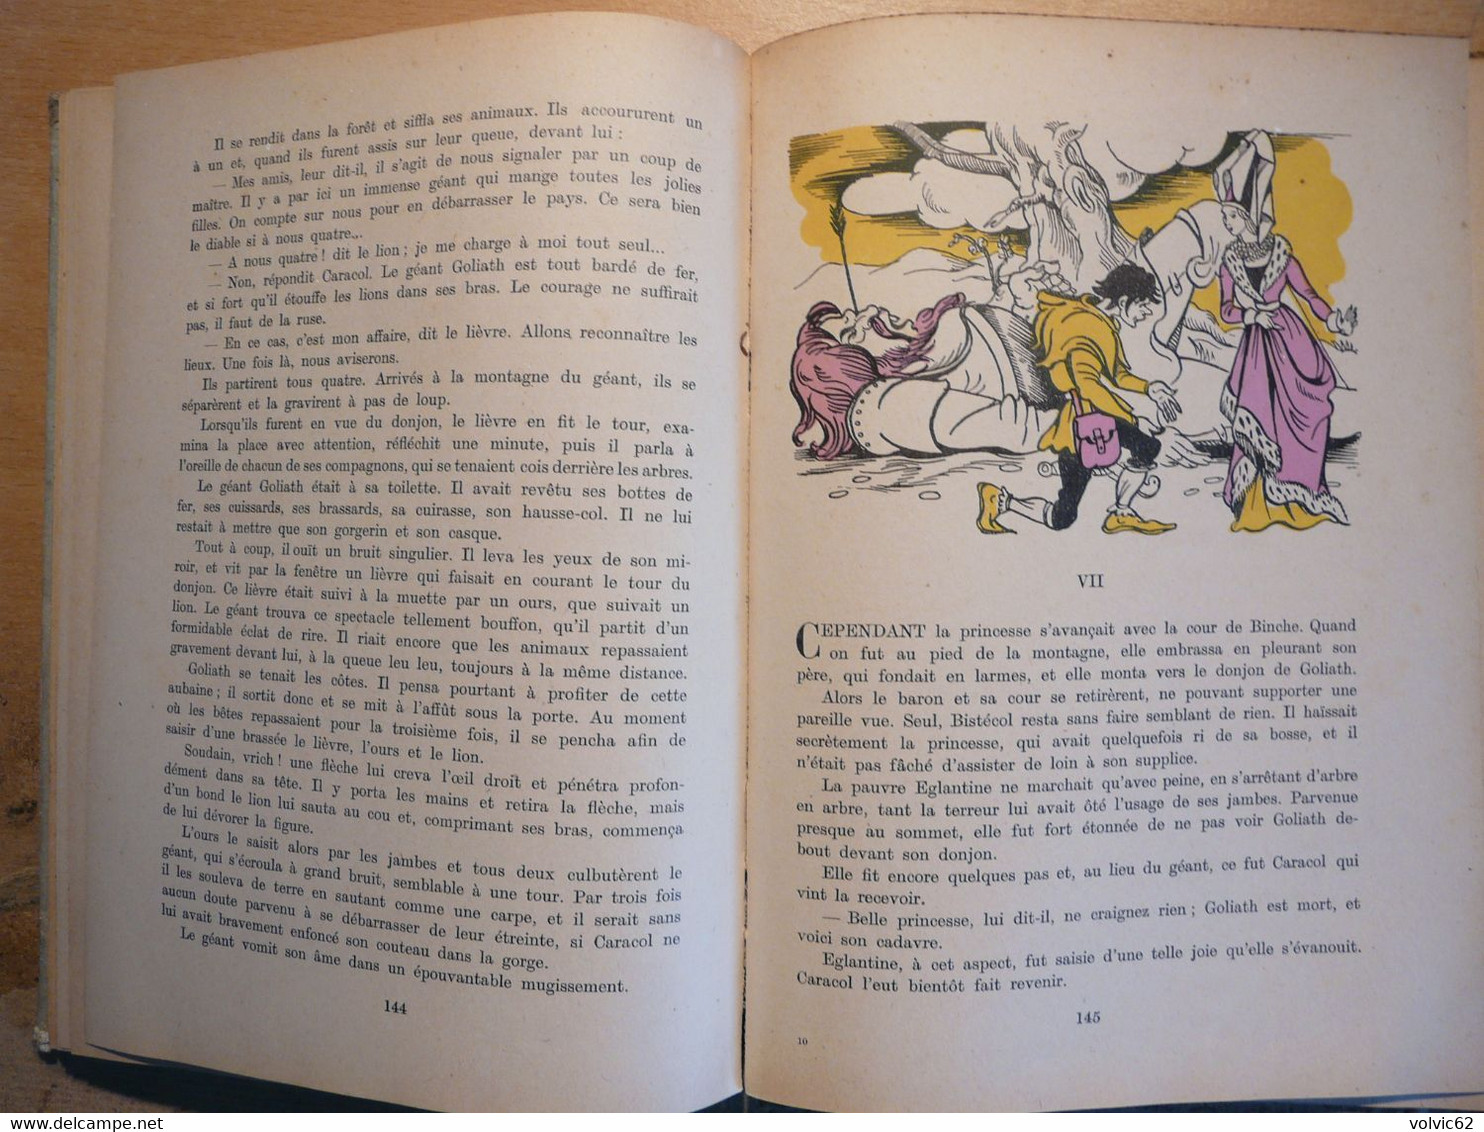 Contes du roi Cambrinus collection Charme des jeunes Charles Deulin 1947 Librairie Istra